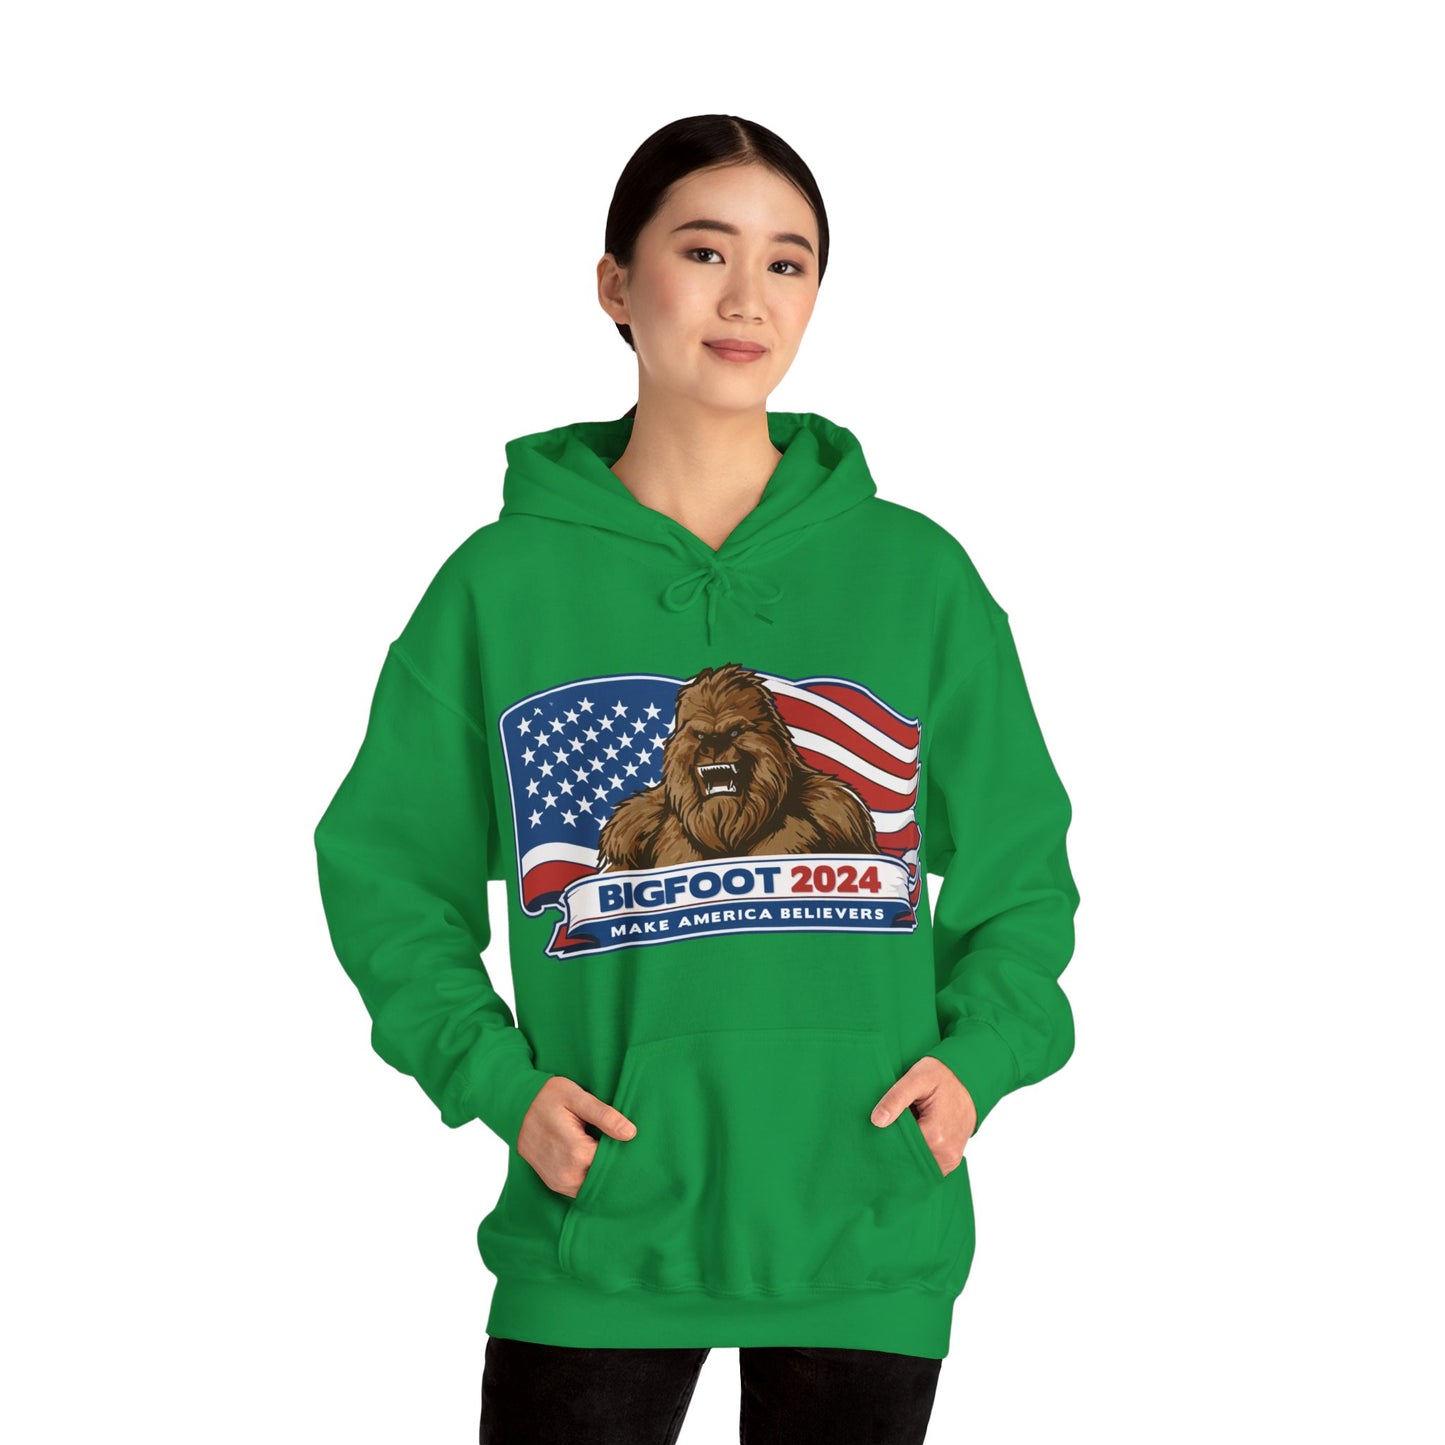 Bigfoot 2024 Unisex Adult Hooded Heavy Blend Sweatshirt